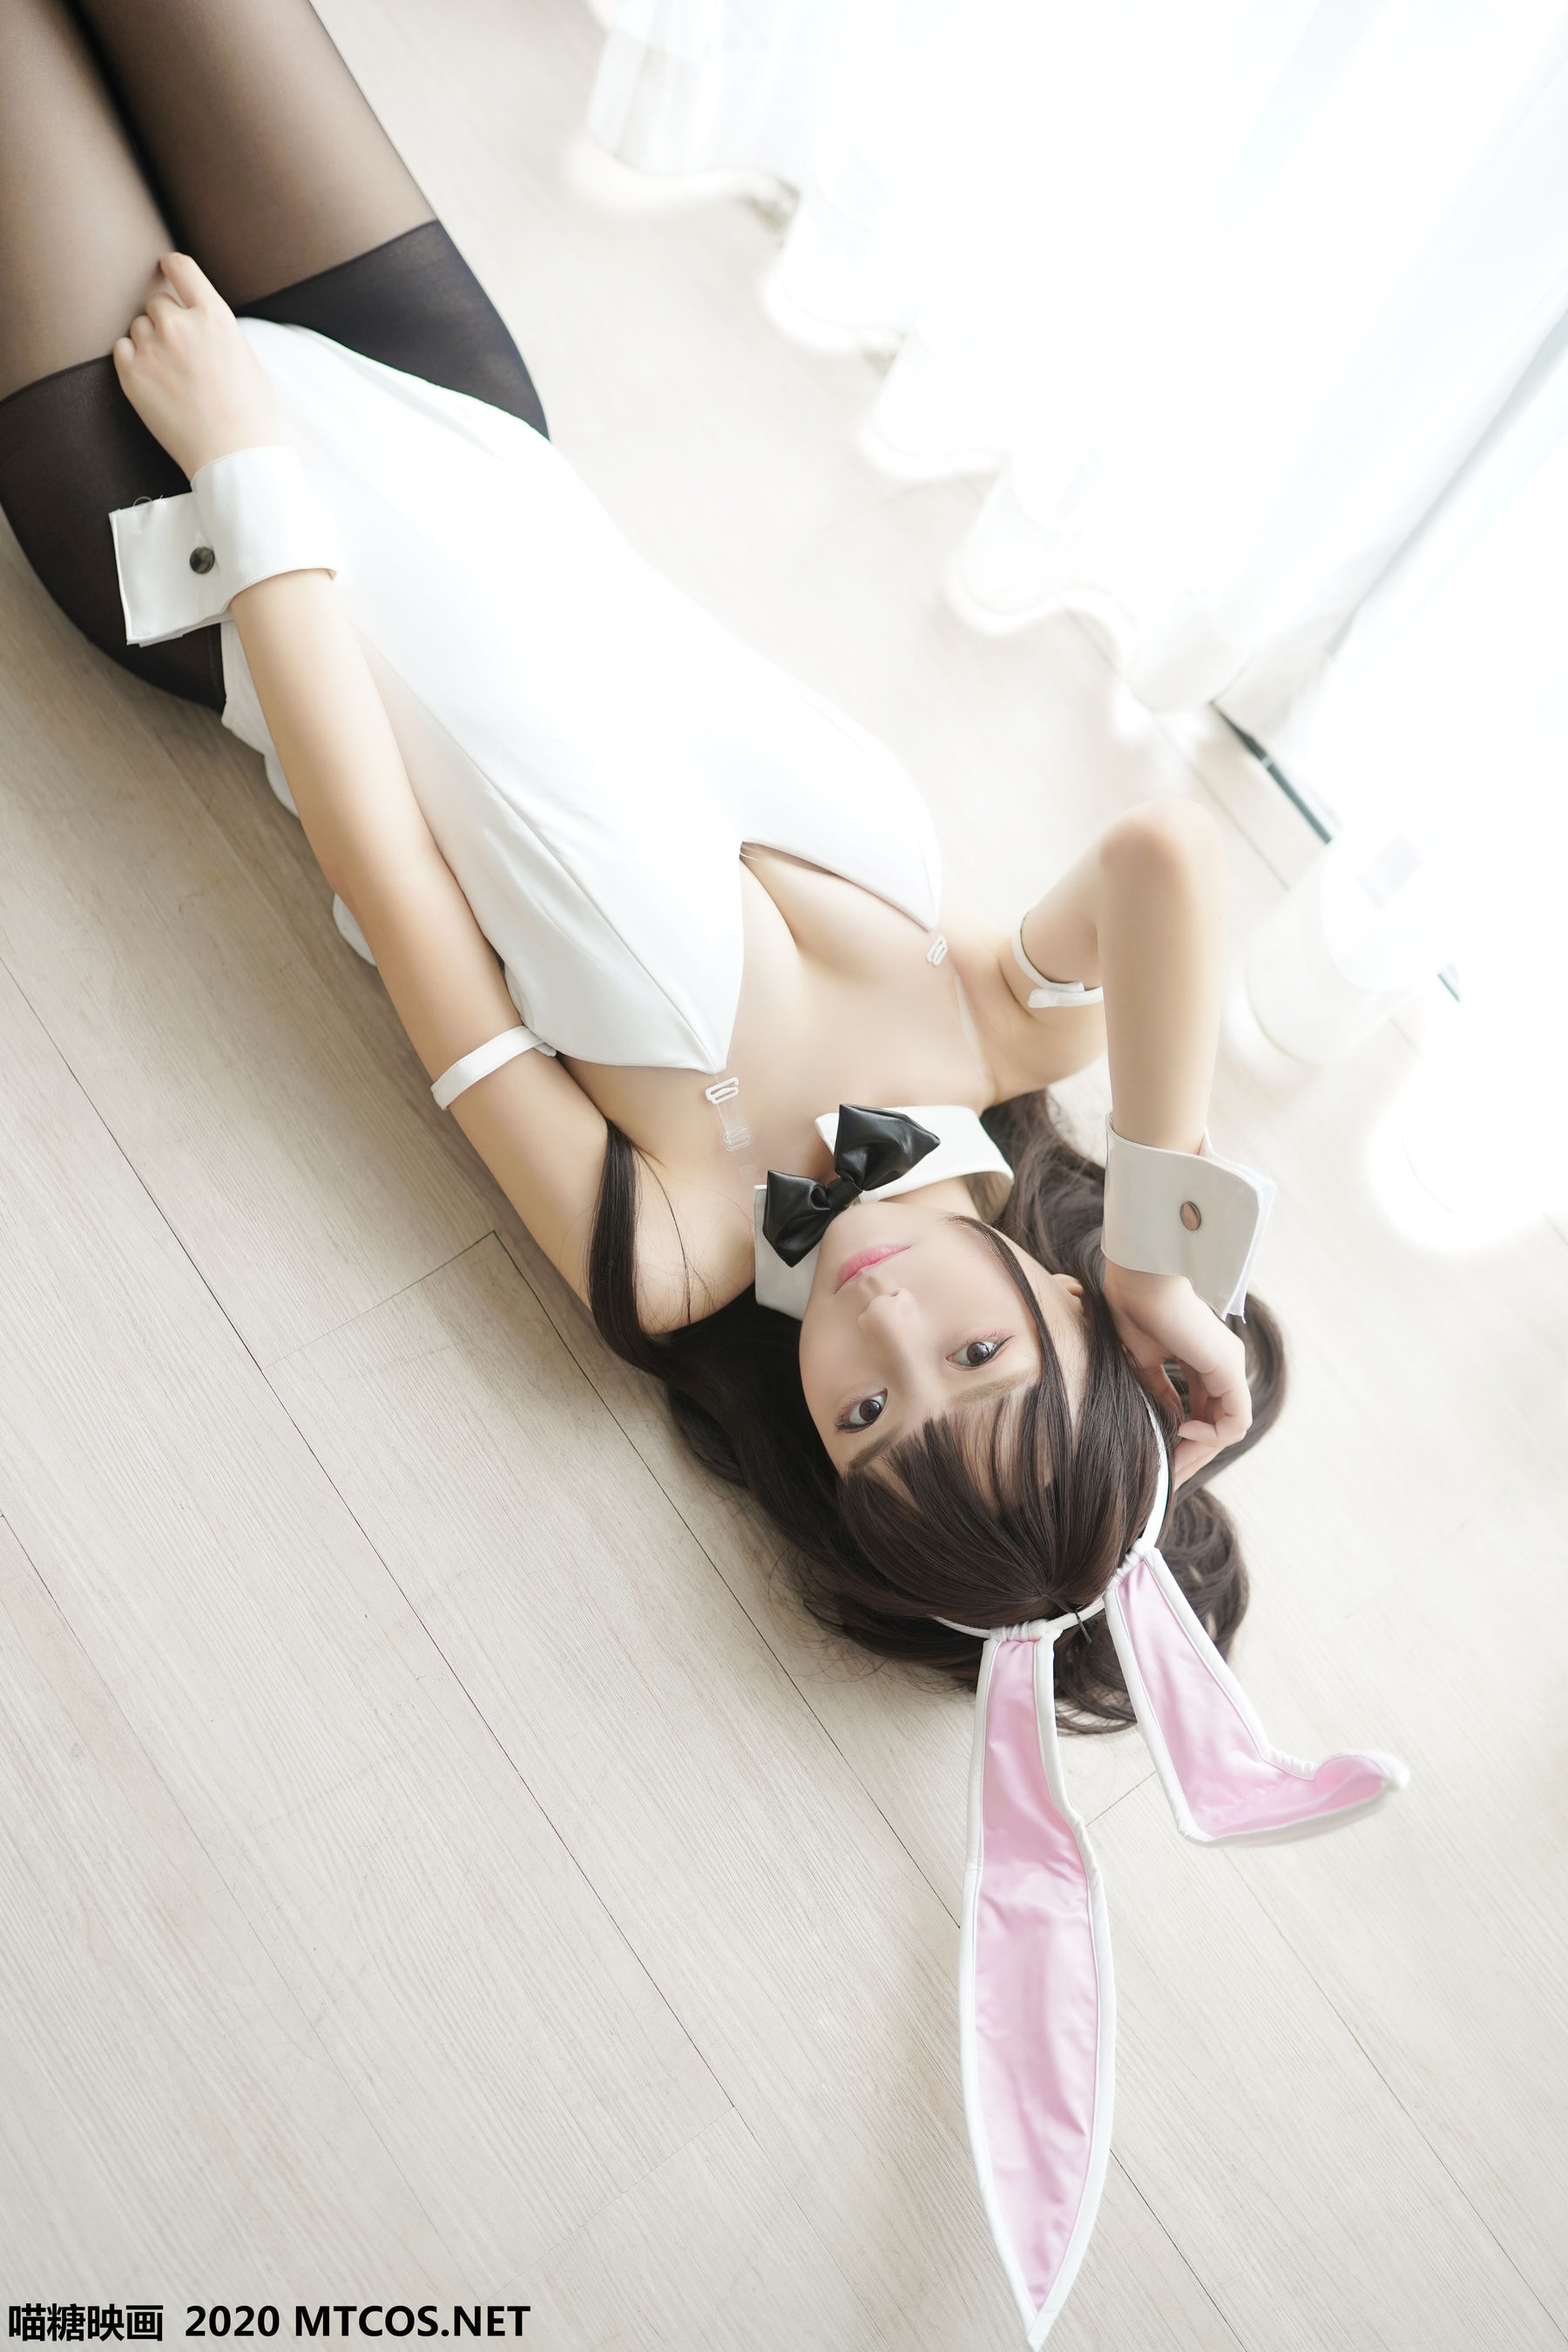 [糖] TML.006 “Sleep White Rabbit Girl” Photo Album